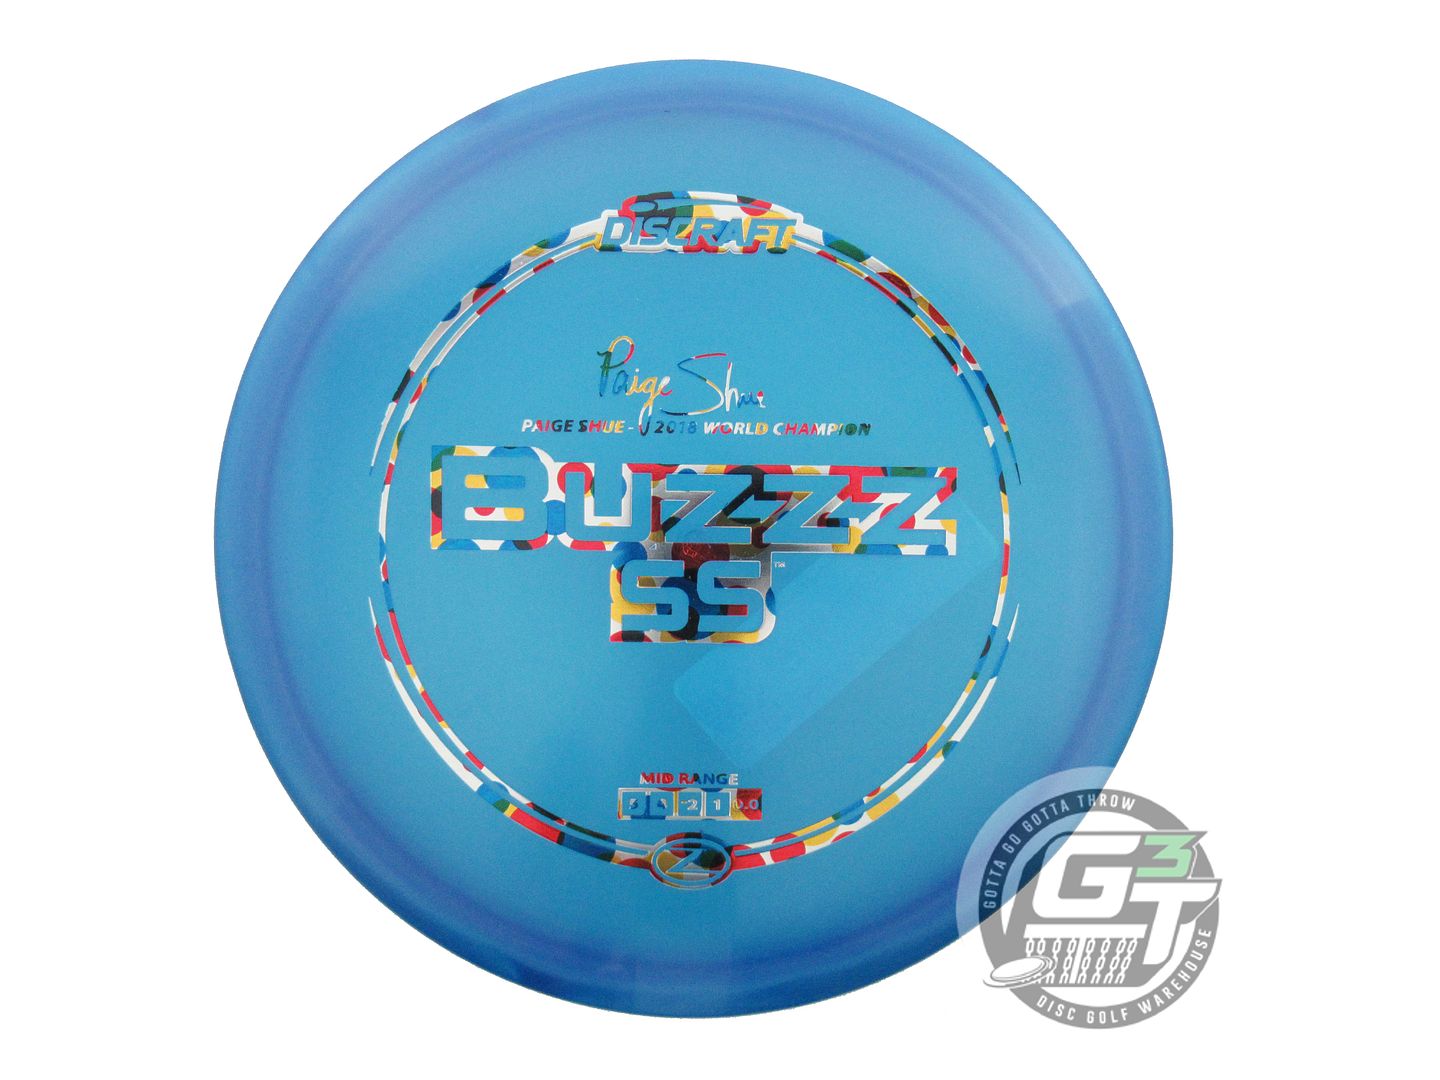 Discraft Elite Z Buzzz SS [Paige Shue 1X] Midrange Golf Disc (Individually Listed)